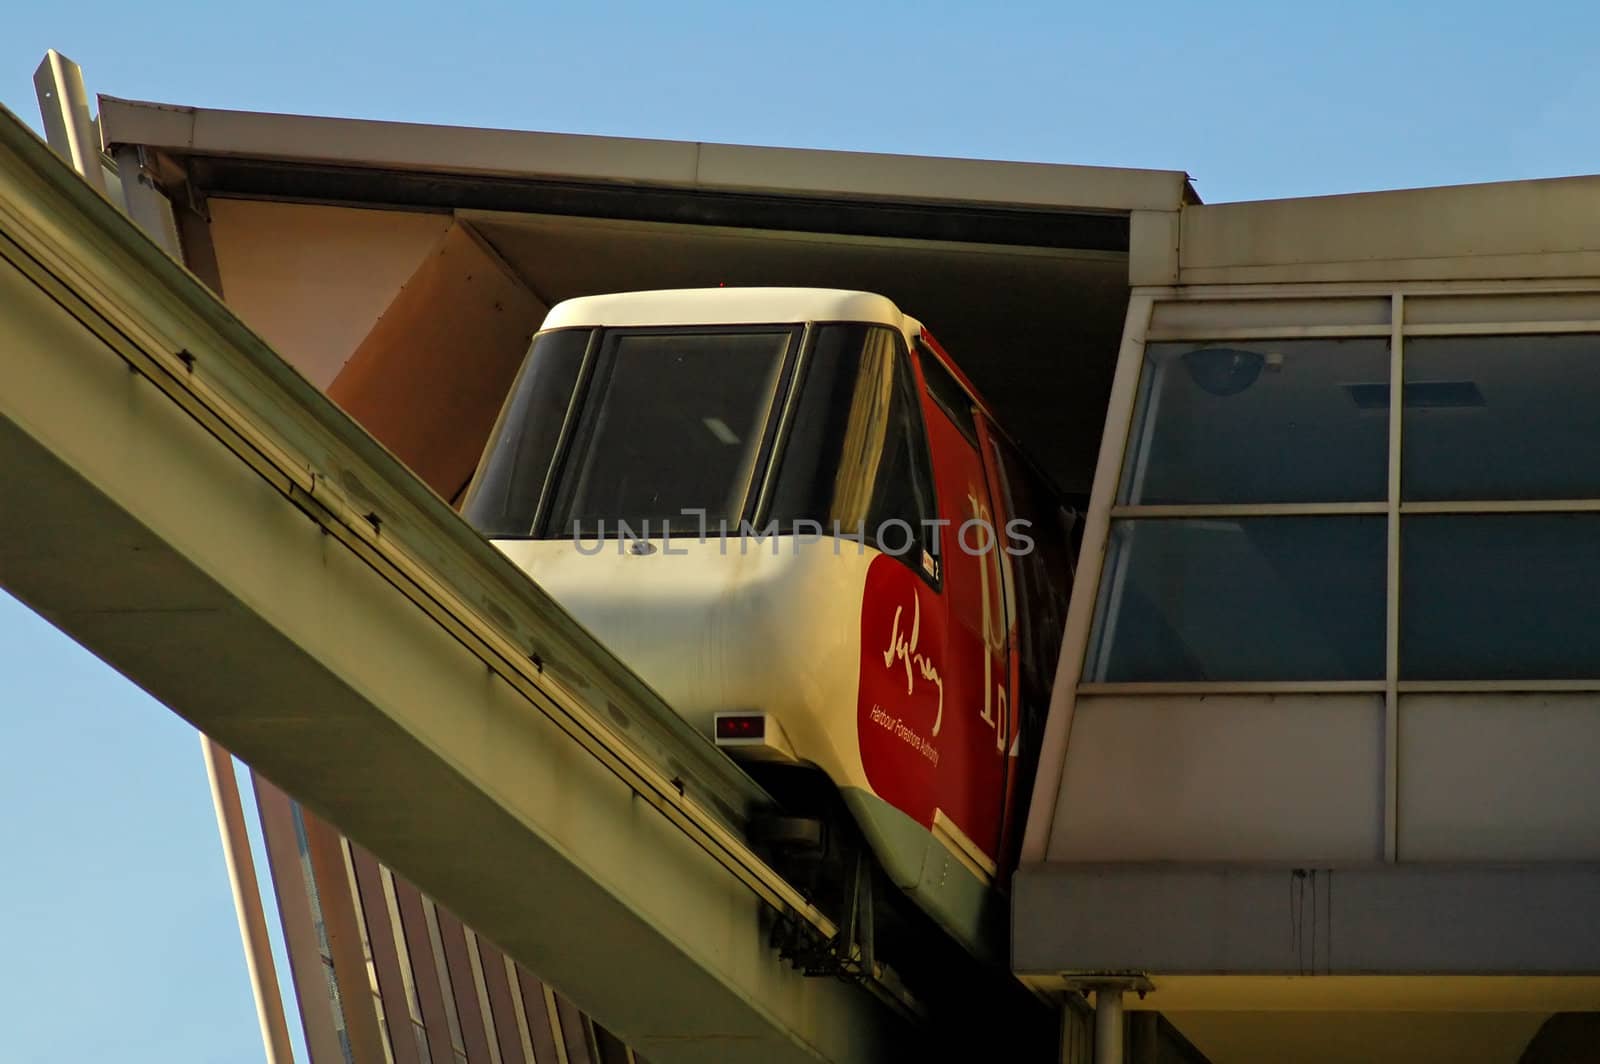 sydney monorail by rorem